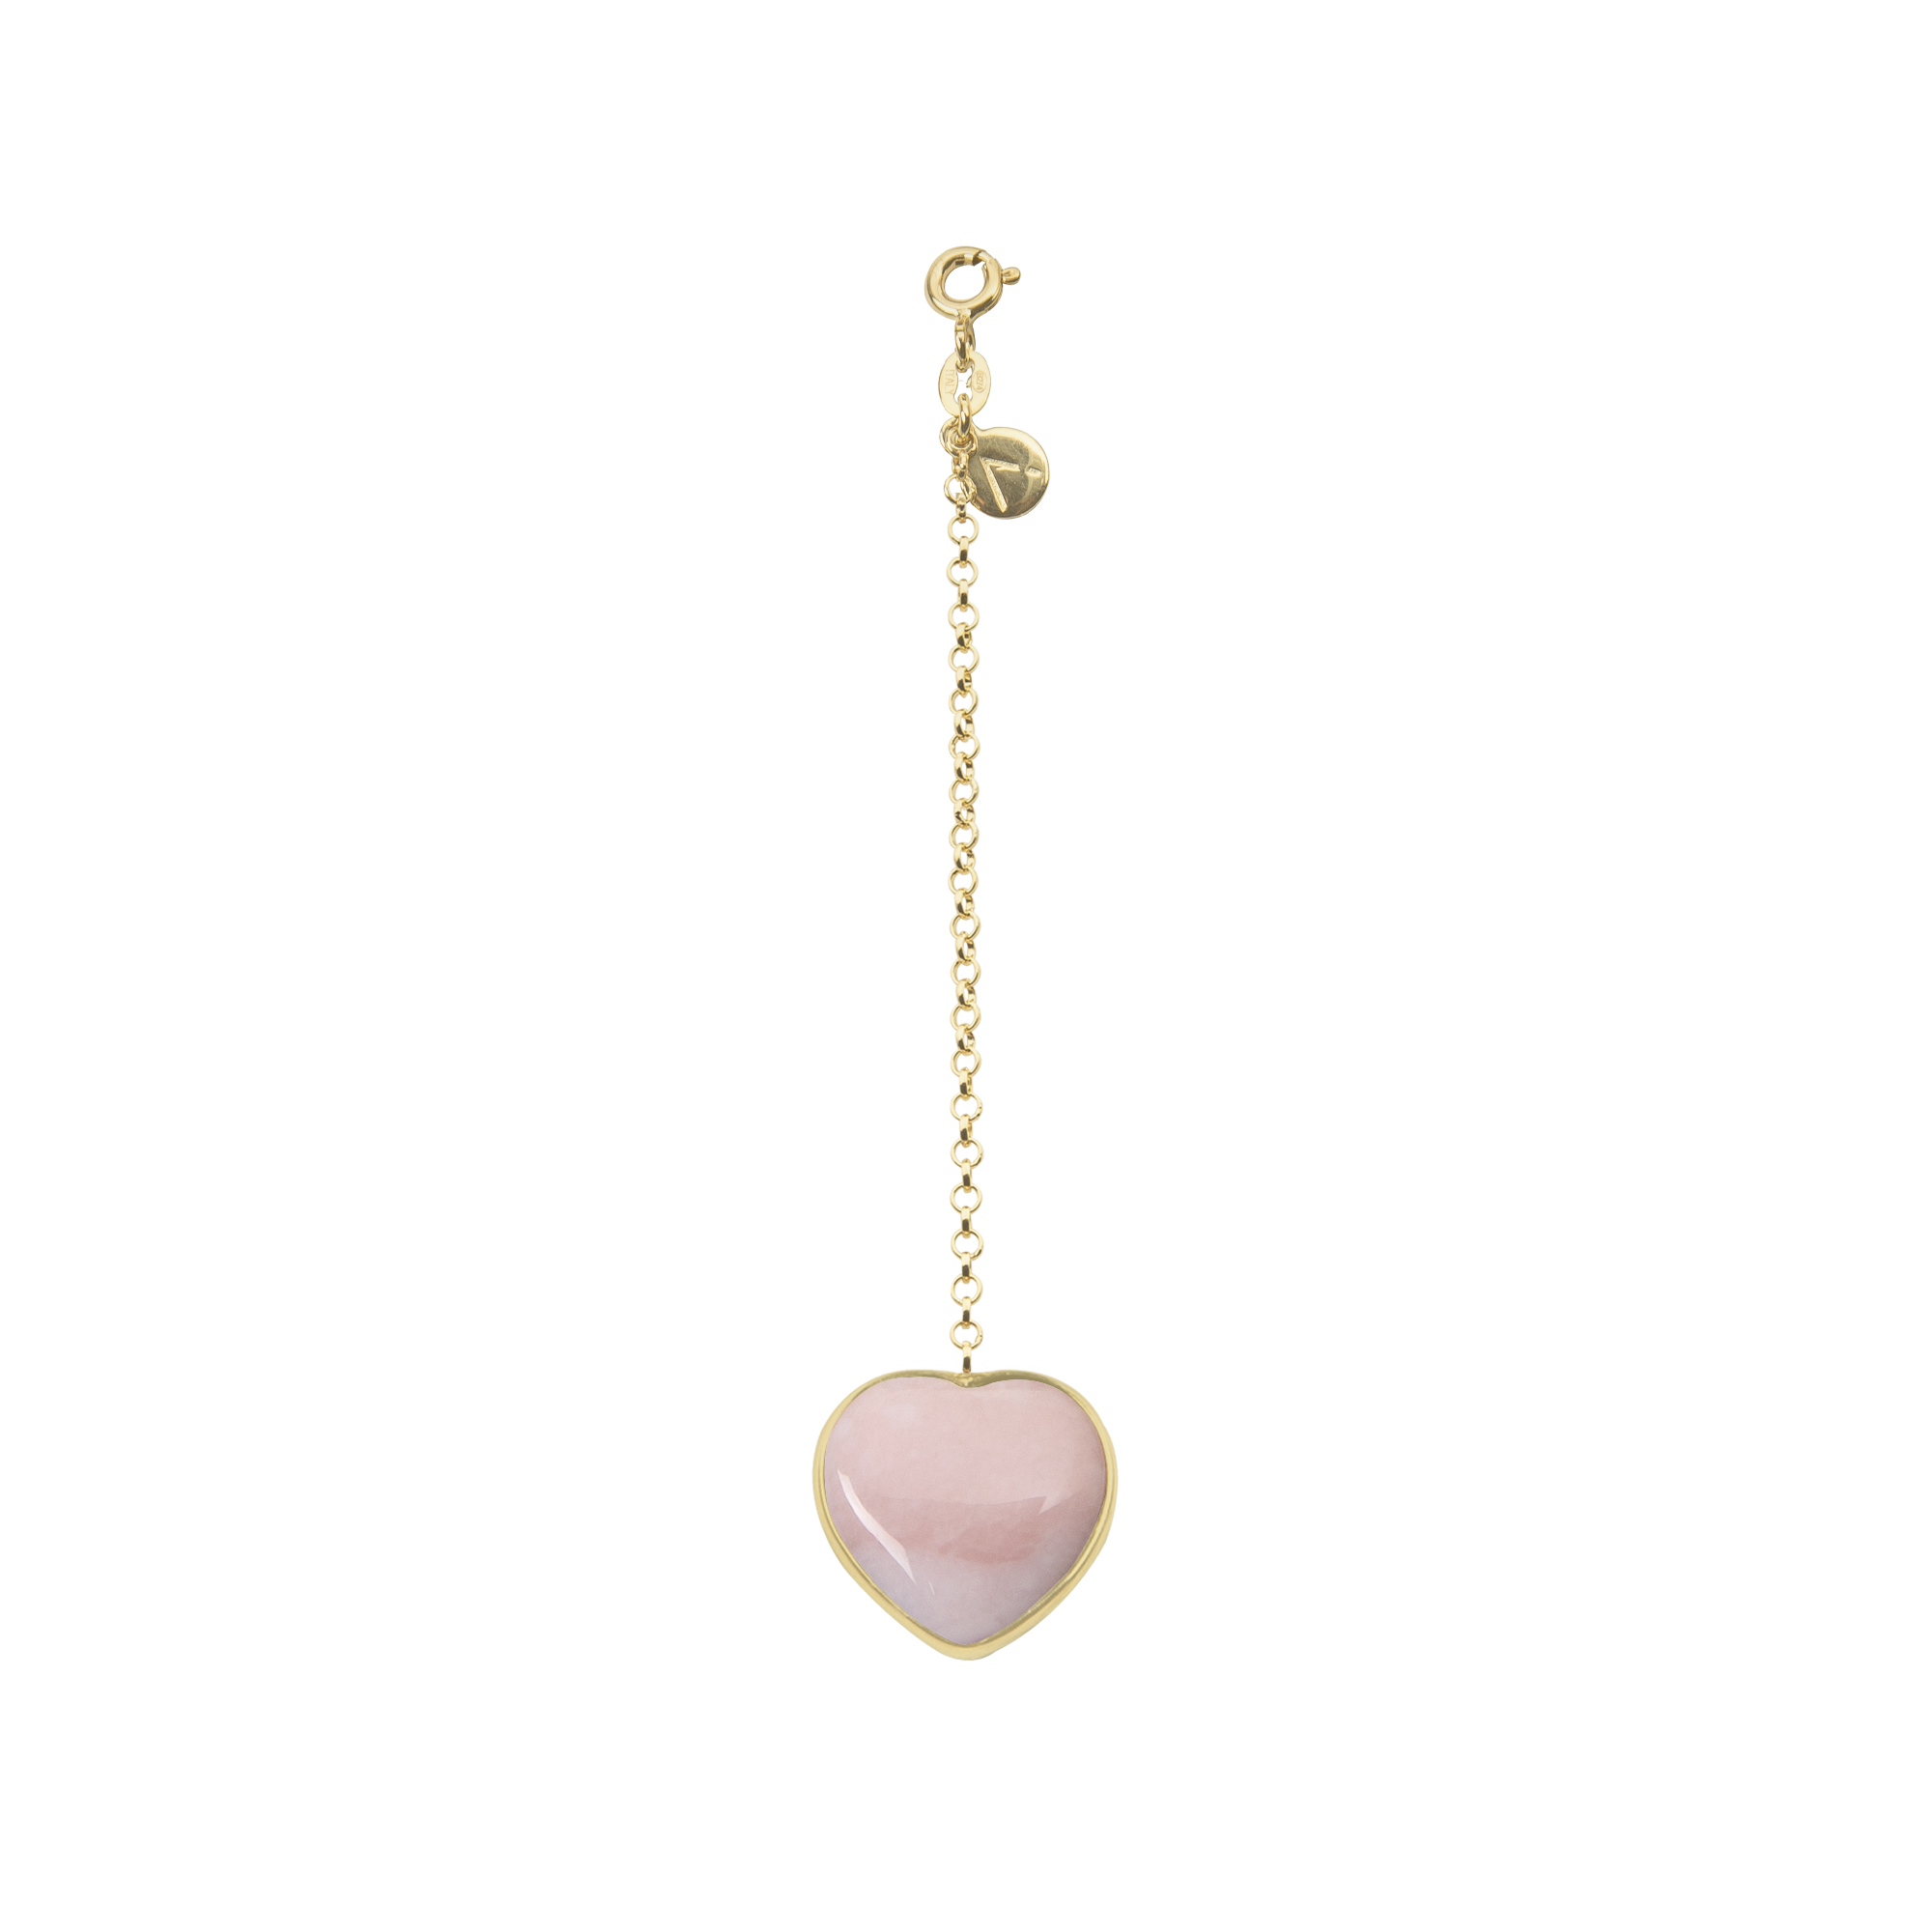 Heart pendant with mini chain, 9K yellow gold, pink Opal stone - Anyoli